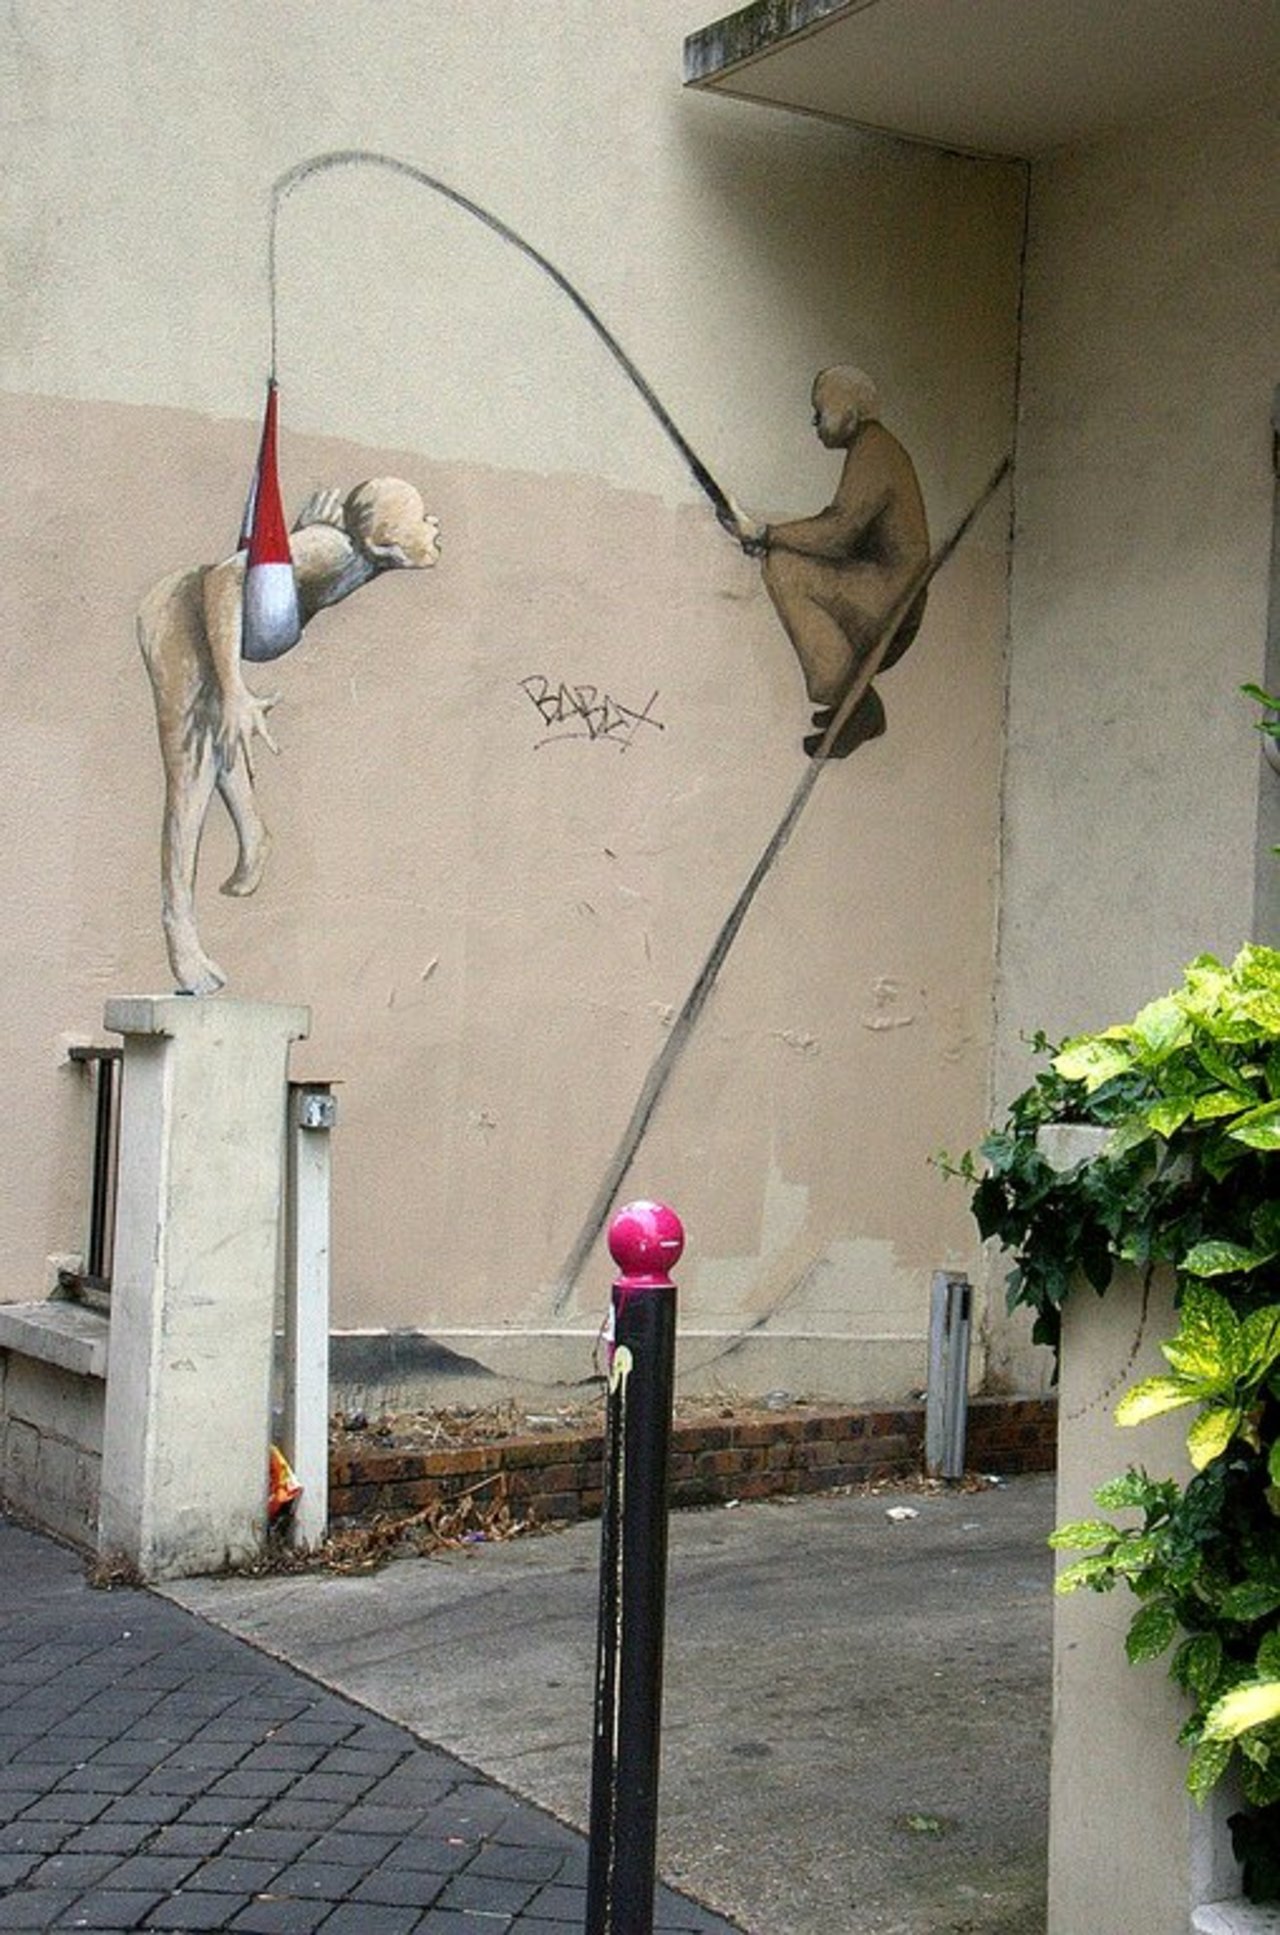 Street Art by philippe herad in #Paris http://www.urbacolors.com #art #mural #graffiti #streetart https://t.co/S1nVErGhkj